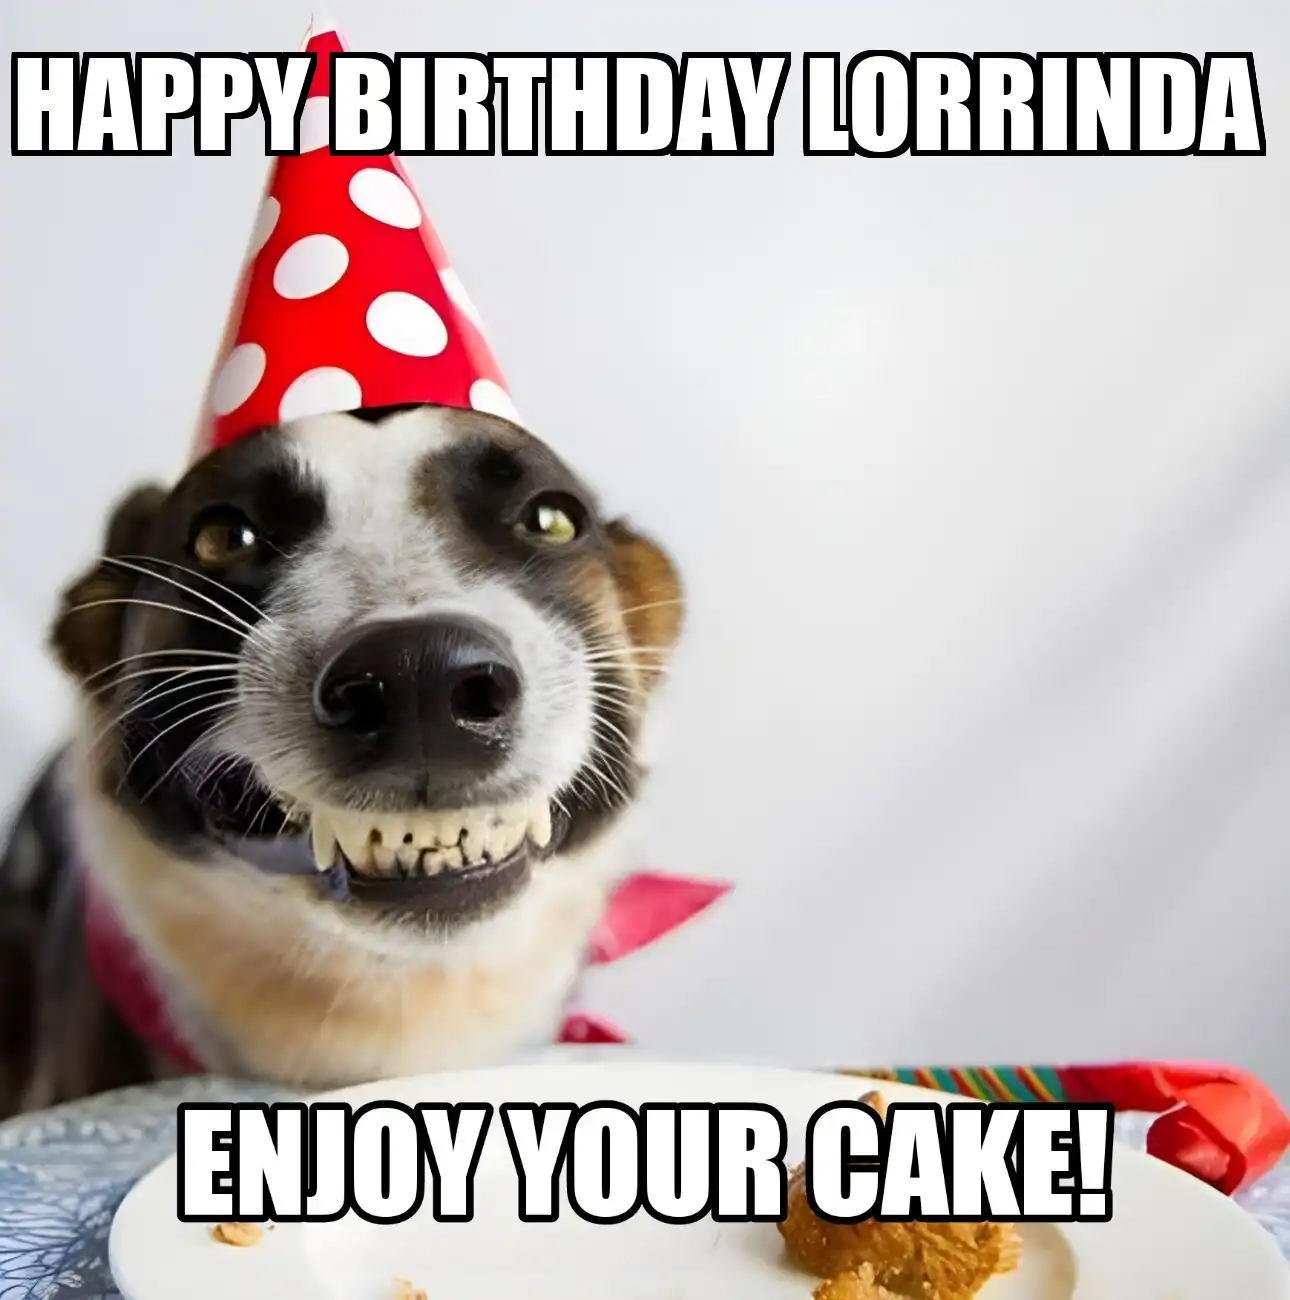 Happy Birthday Lorrinda Enjoy Your Cake Dog Meme